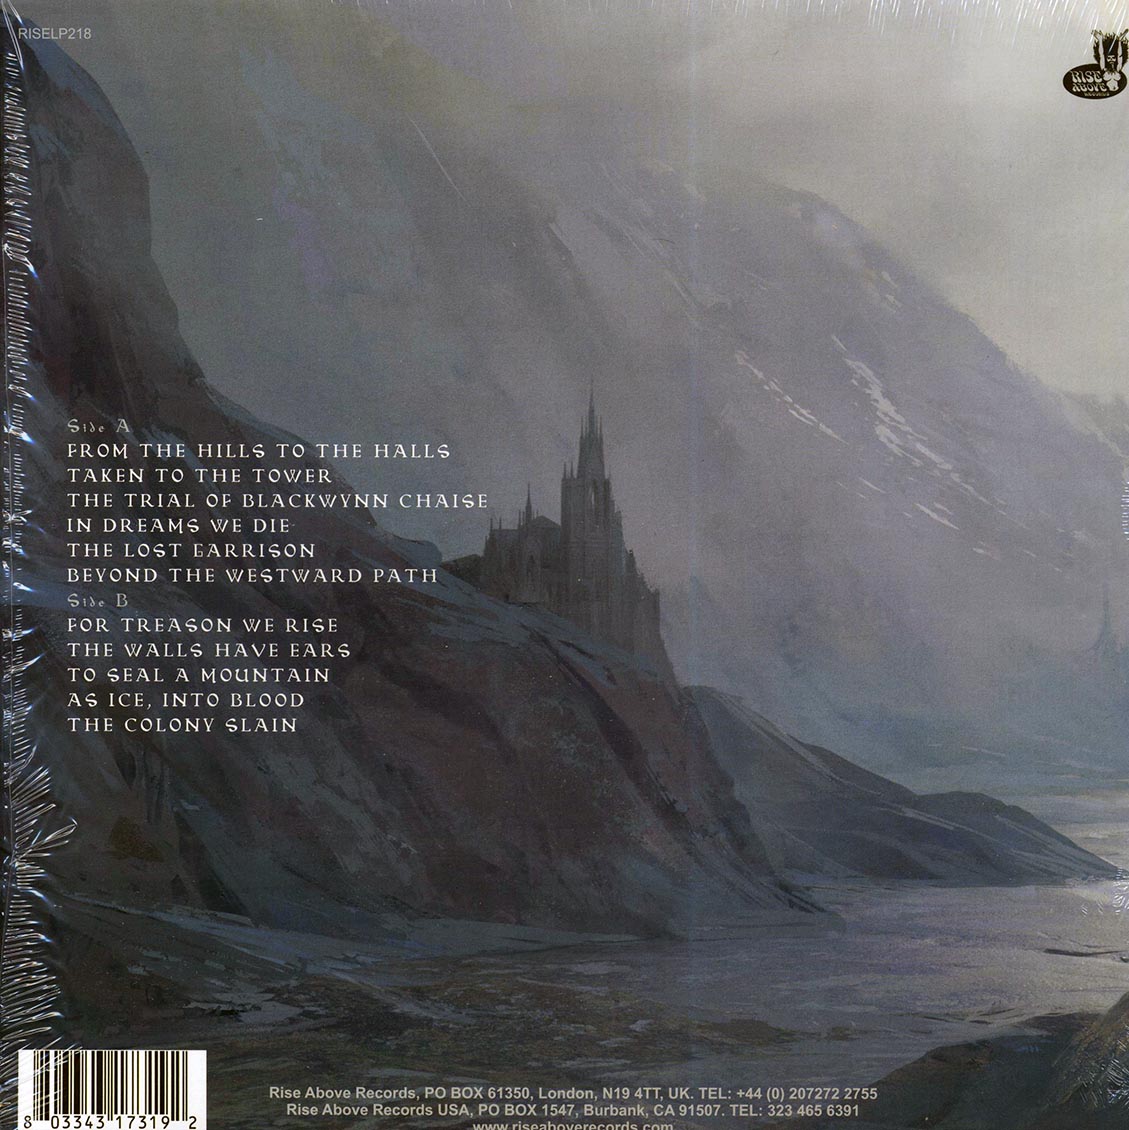 Age Of Taurus - The Colony Slain - Vinyl LP, LP